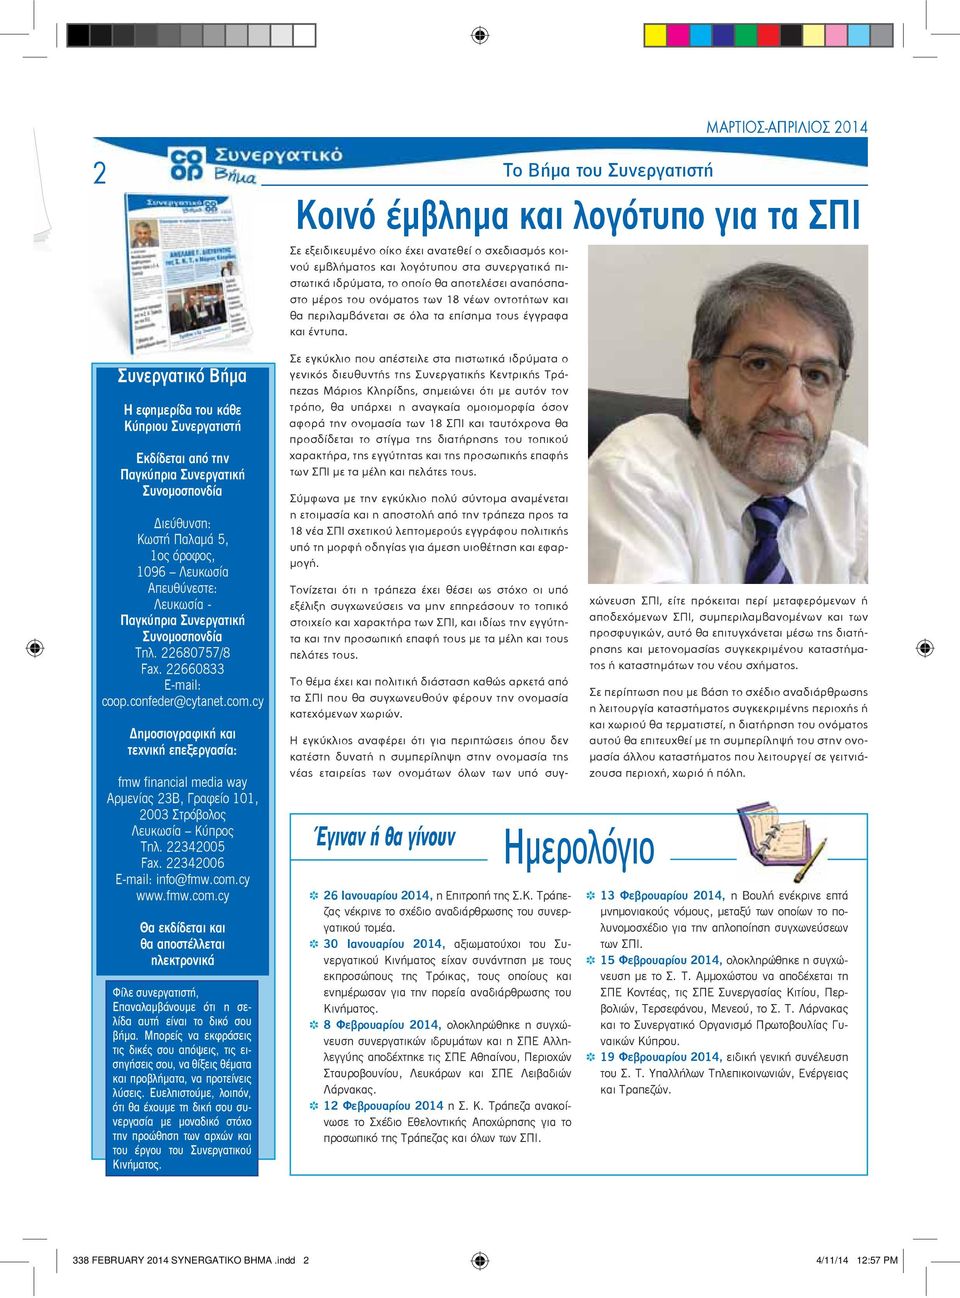 cy ημοσιογραφική και τεχνική επεξεργασία: fmw financial media way Αρμενίας 23B, Γραφείο 101, 2003 Στρόβολος Λευκωσία Κύπρος Τηλ. 22342005 Fax. 22342006 E-mail: info@fmw.com.